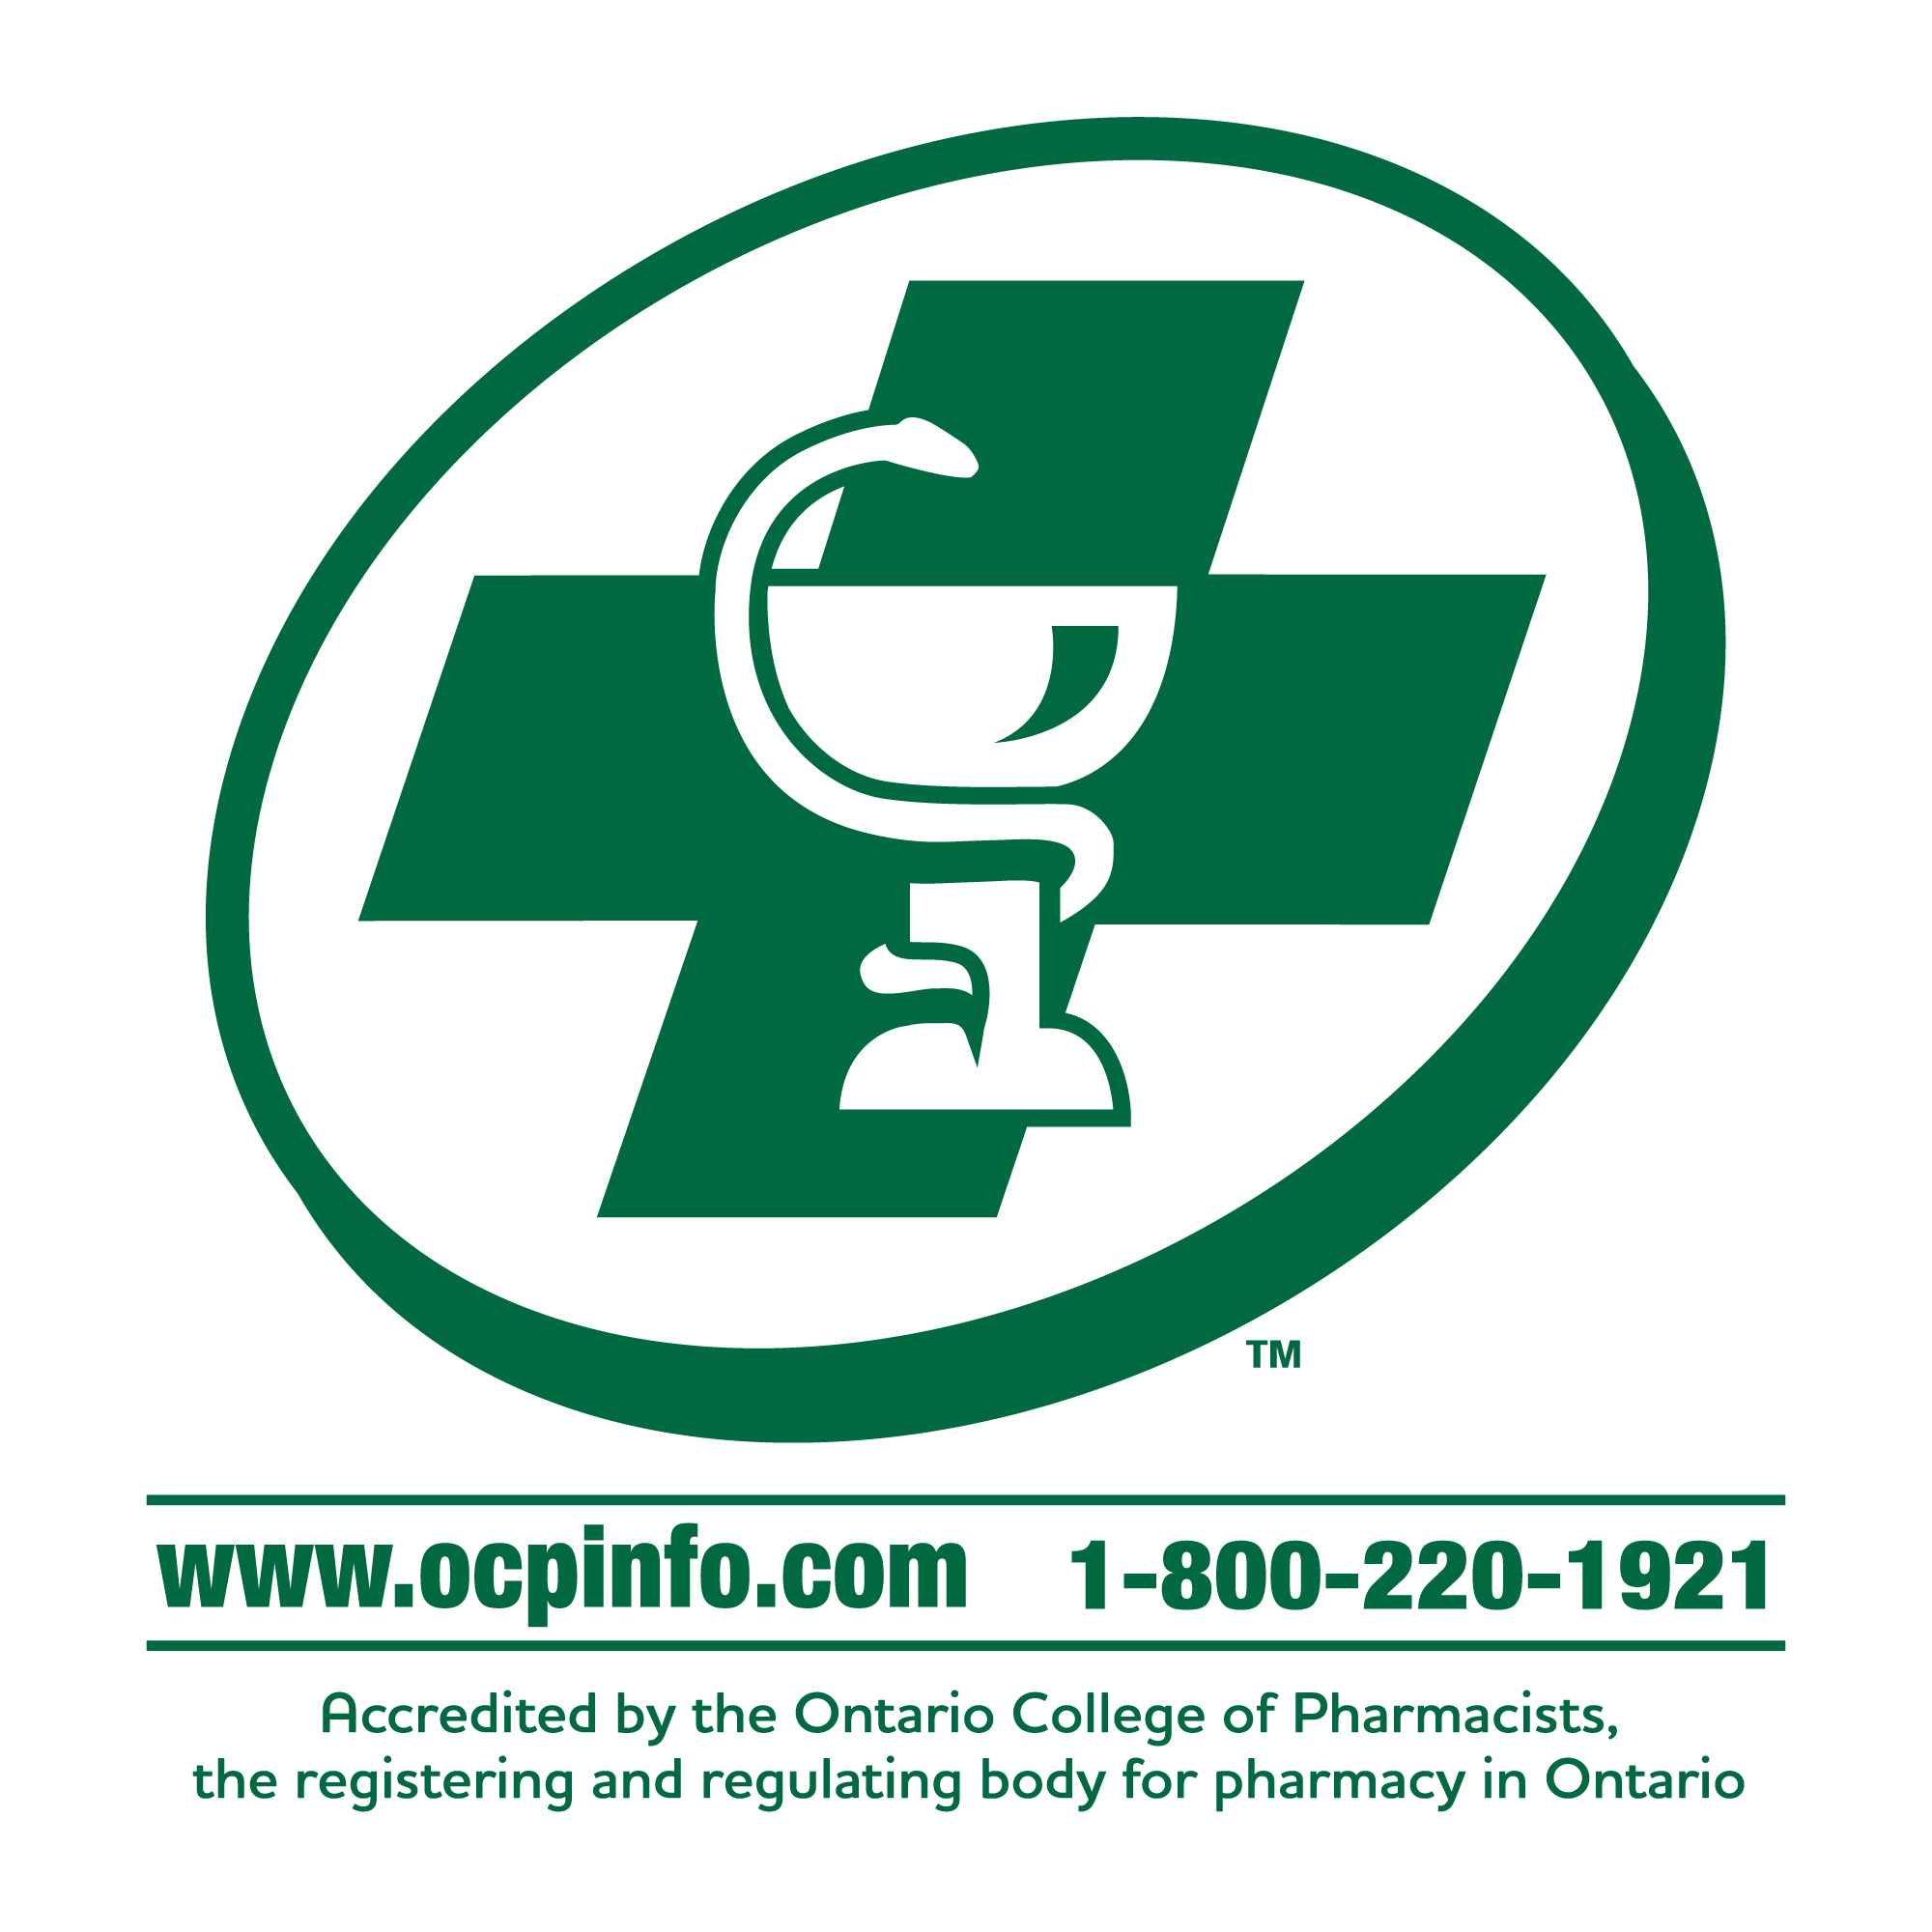 Ontario College of Pharmacists Accreditation logo